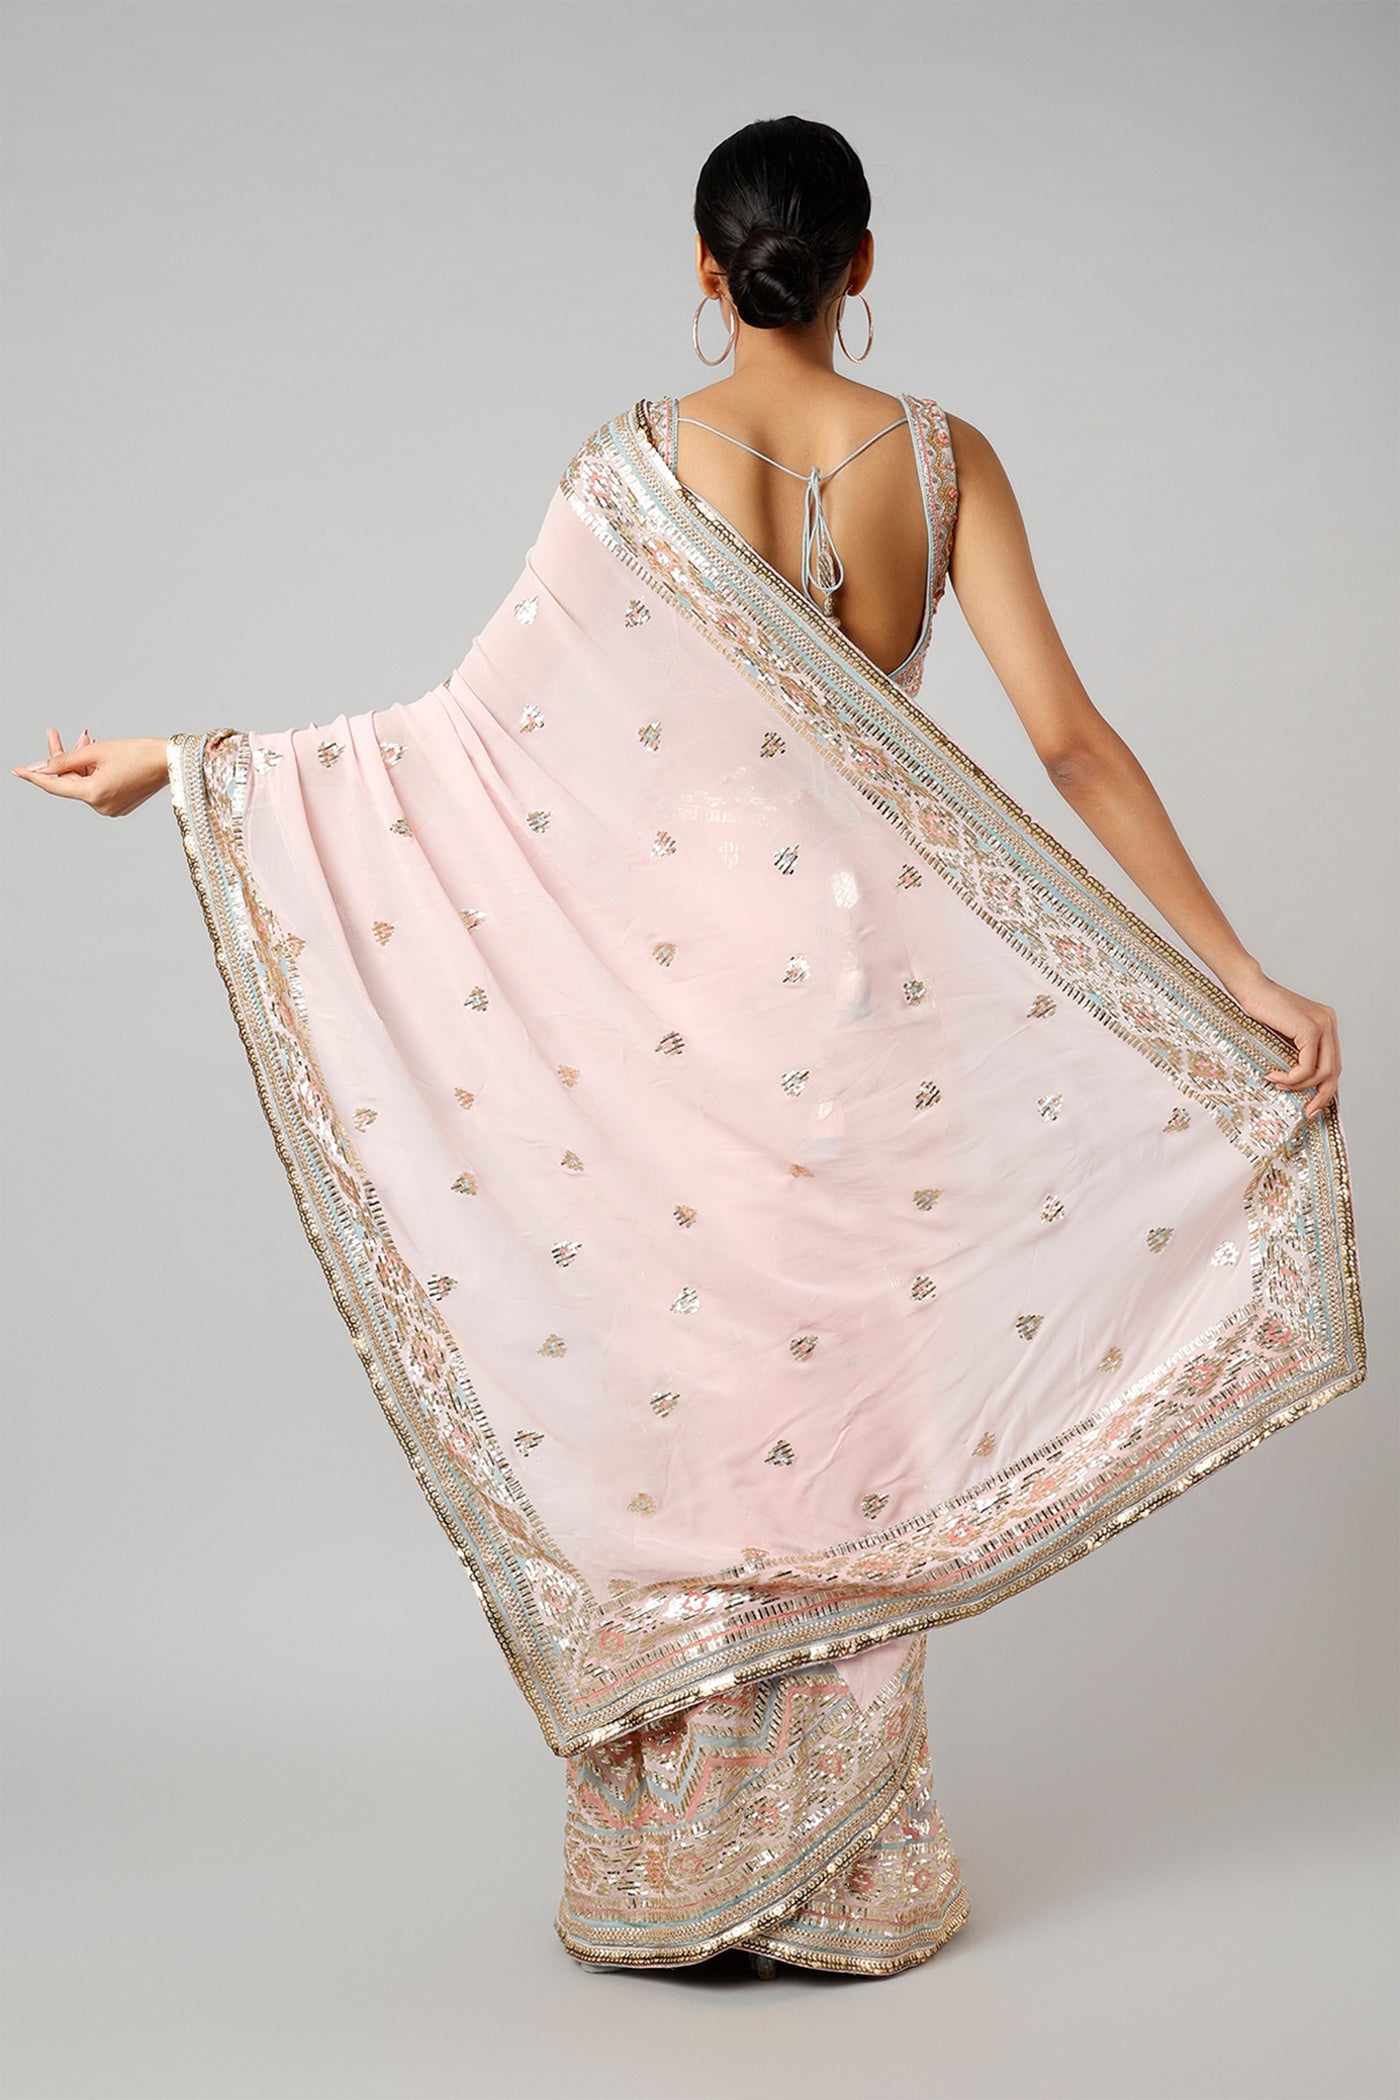 Gopi vaid fez saree rose festive Indian designer wear online shopping melange singapore